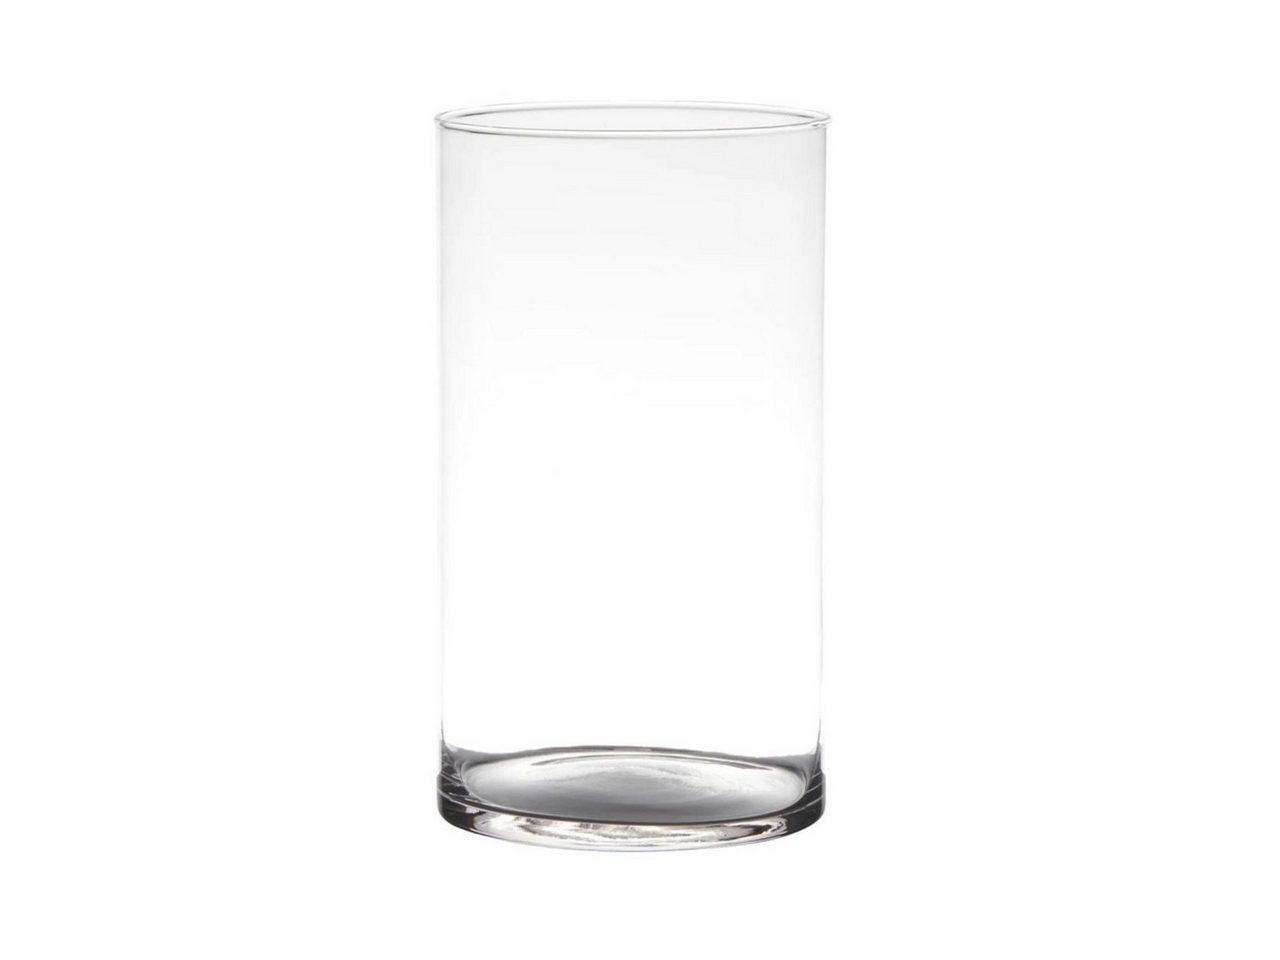 Hakbijl Glass Deko-Glas, Transparent H:29cm D:16cm Glas von Hakbijl Glass